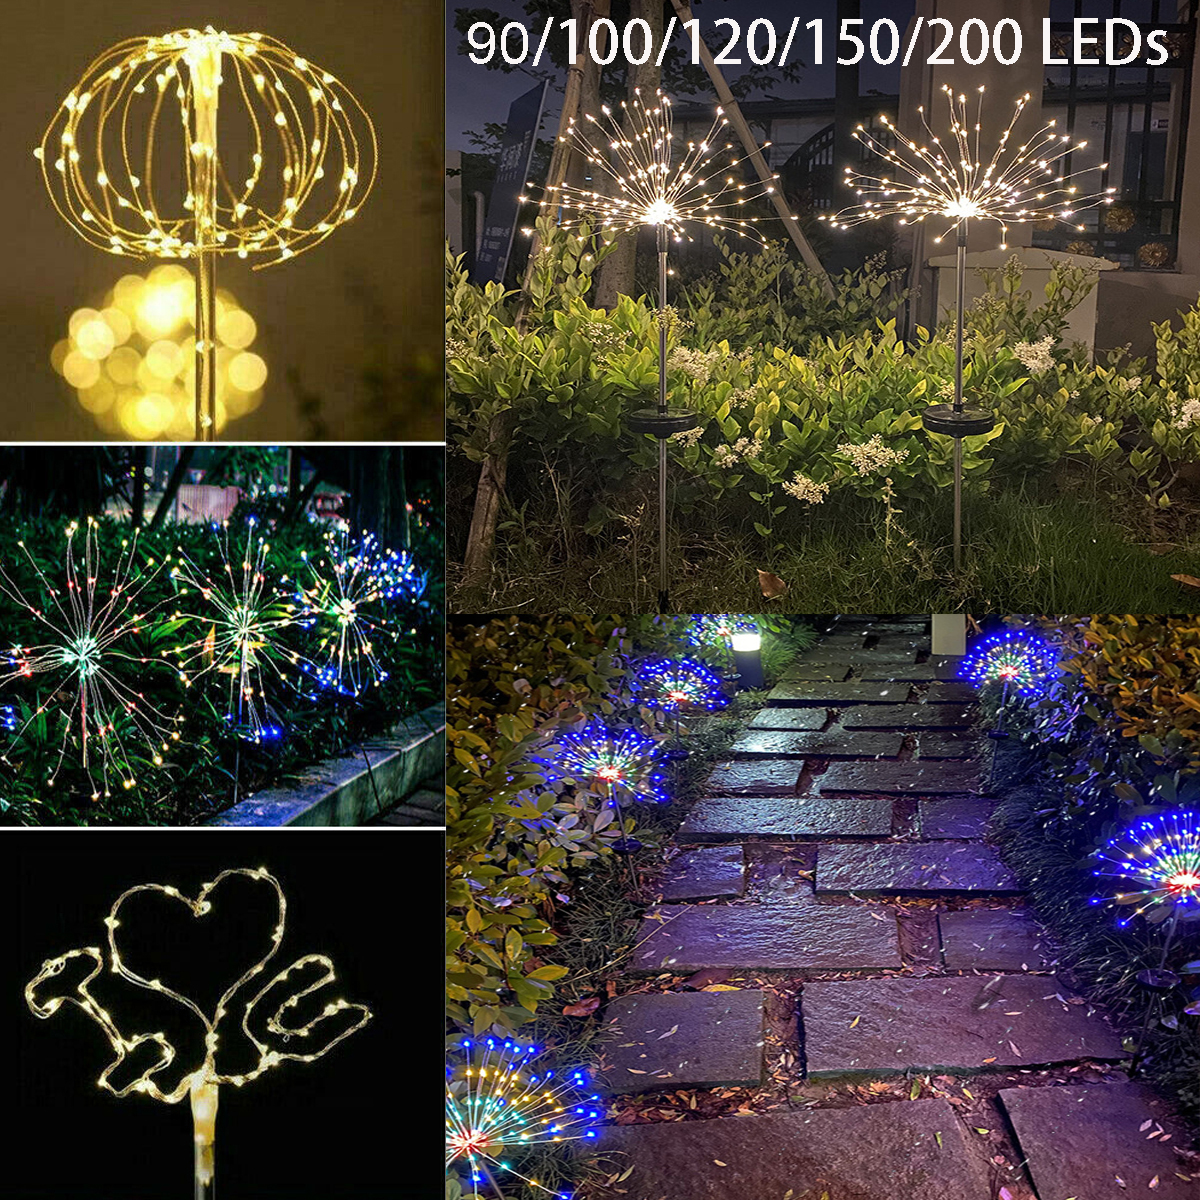 20015012010090-LED-Solar-Power-Fairy-Lights-String-Lamps-Party-Wedding-Decor-Garden-Remote-Control-1768628-1